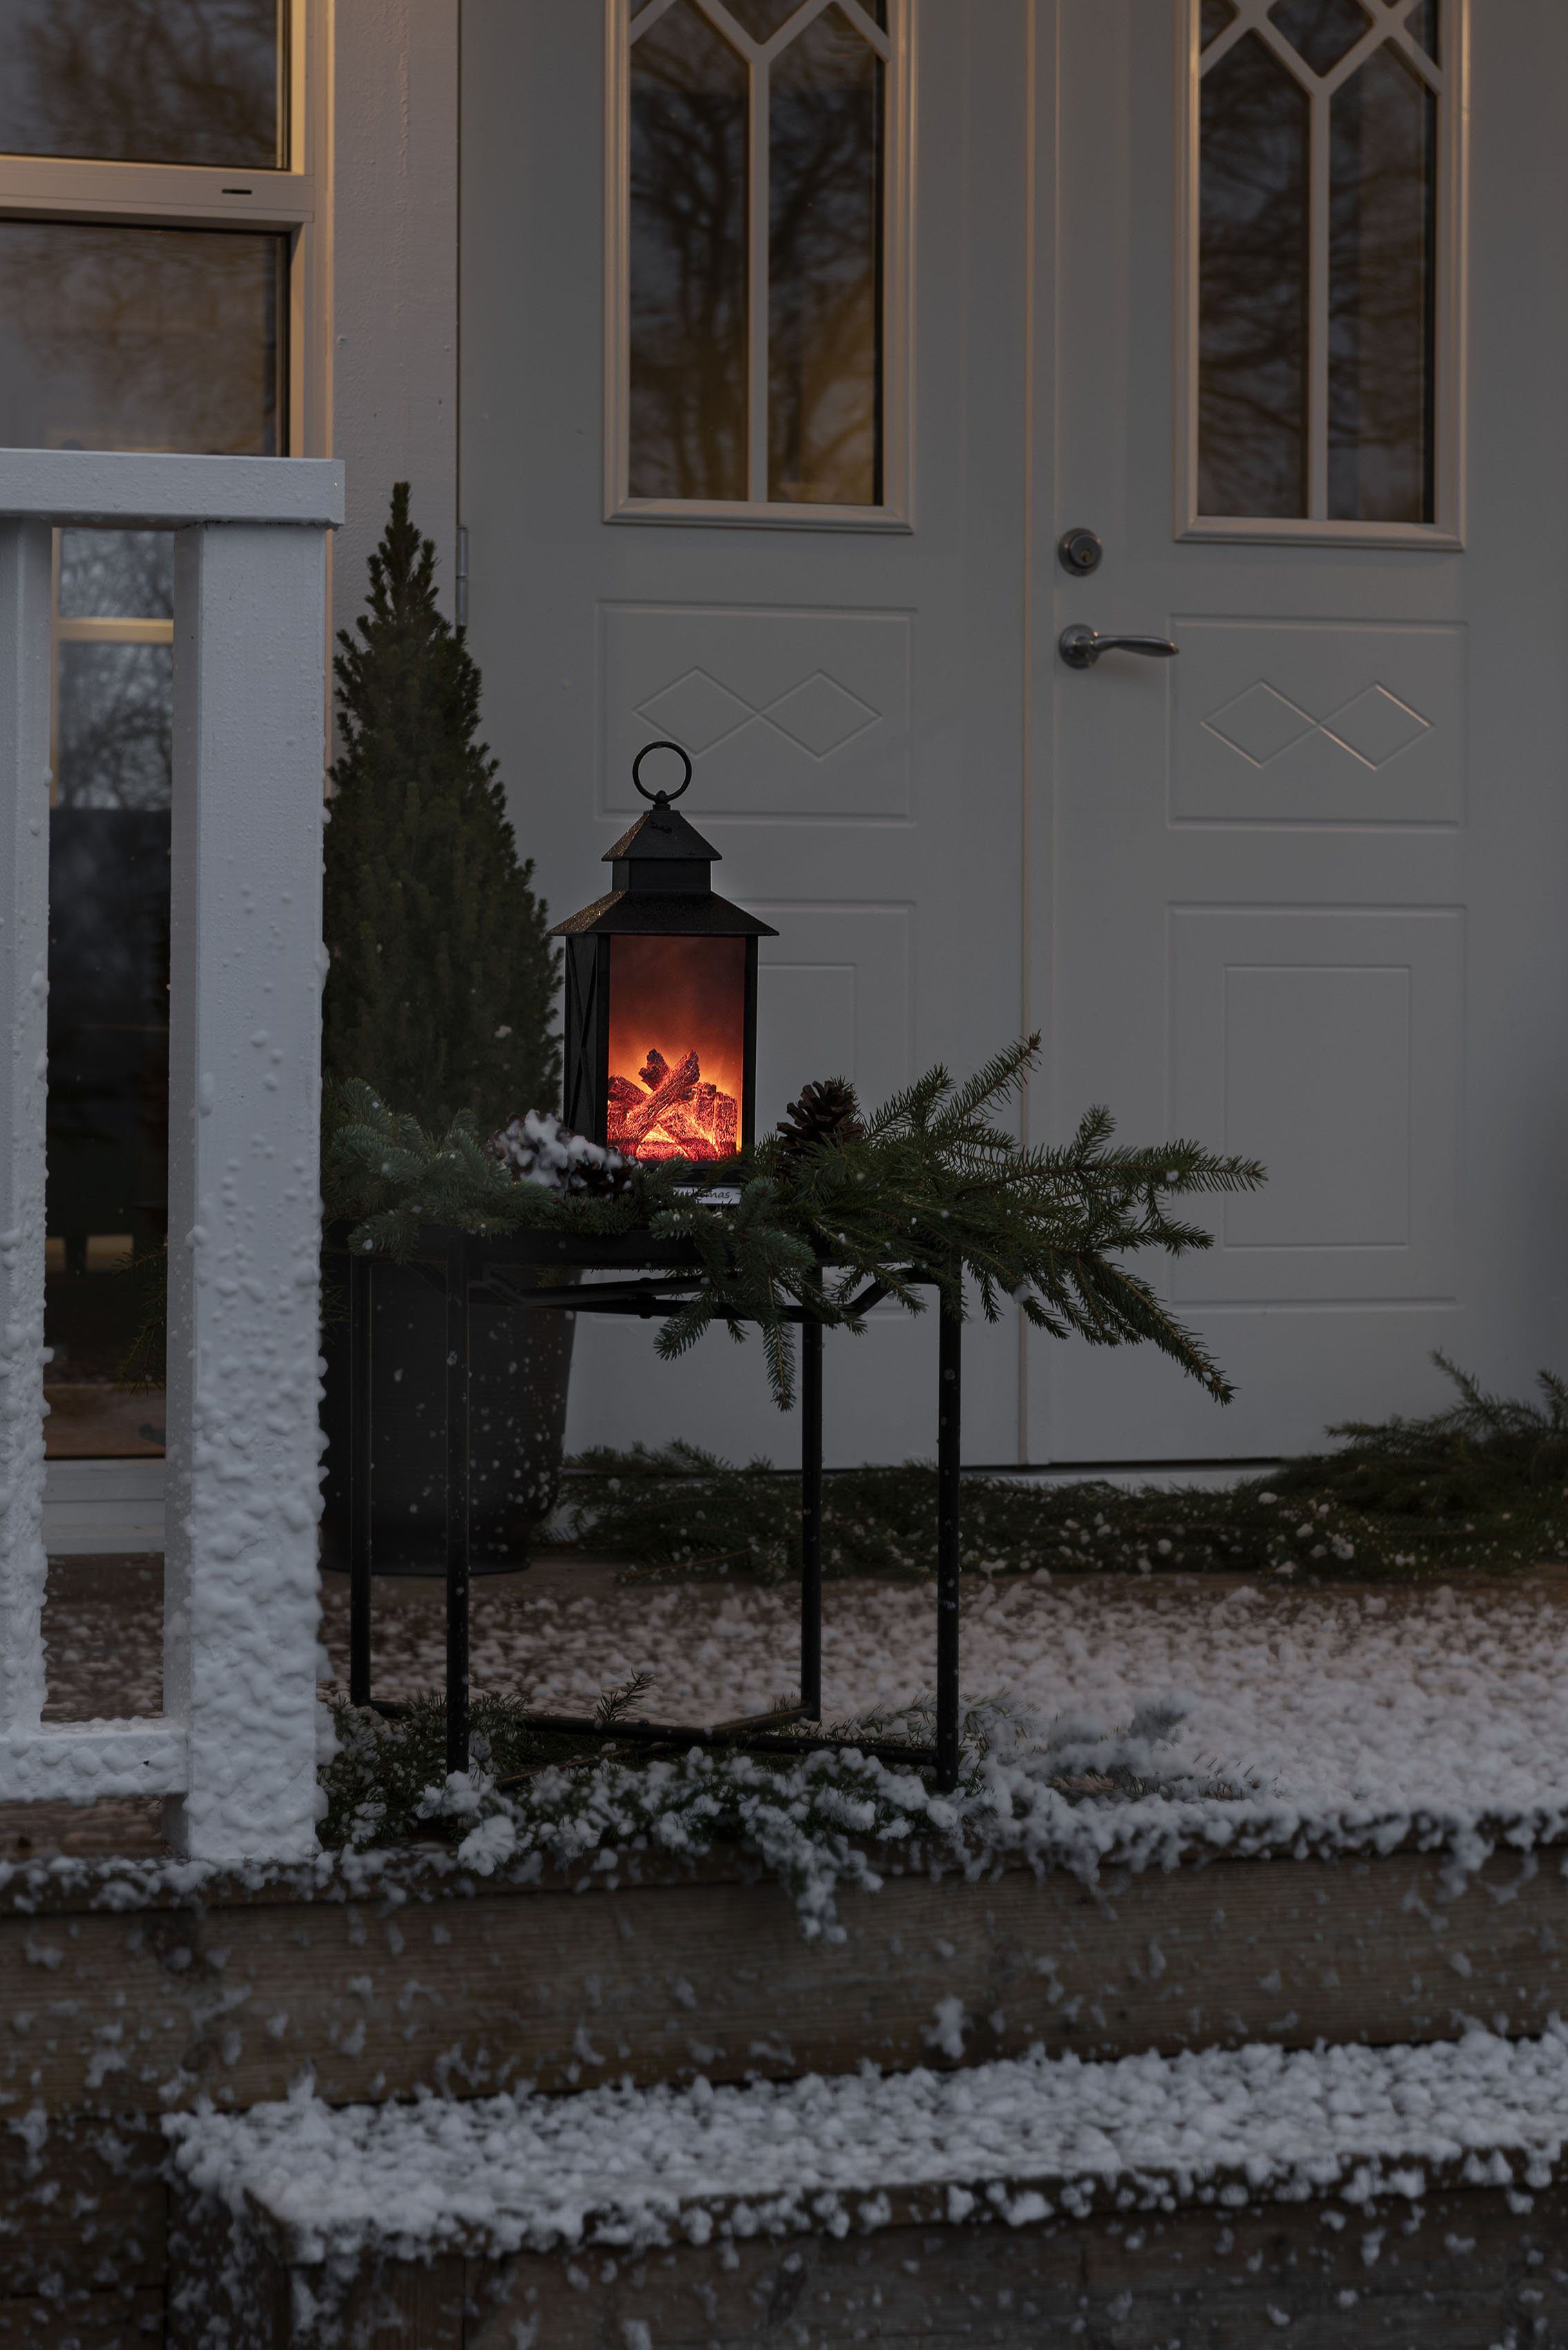 KONSTSMIDE LED Laterne Weihnachtsdeko Warmweiß, klein, Laterne, integriert, LED fest Kamin aussen, LED